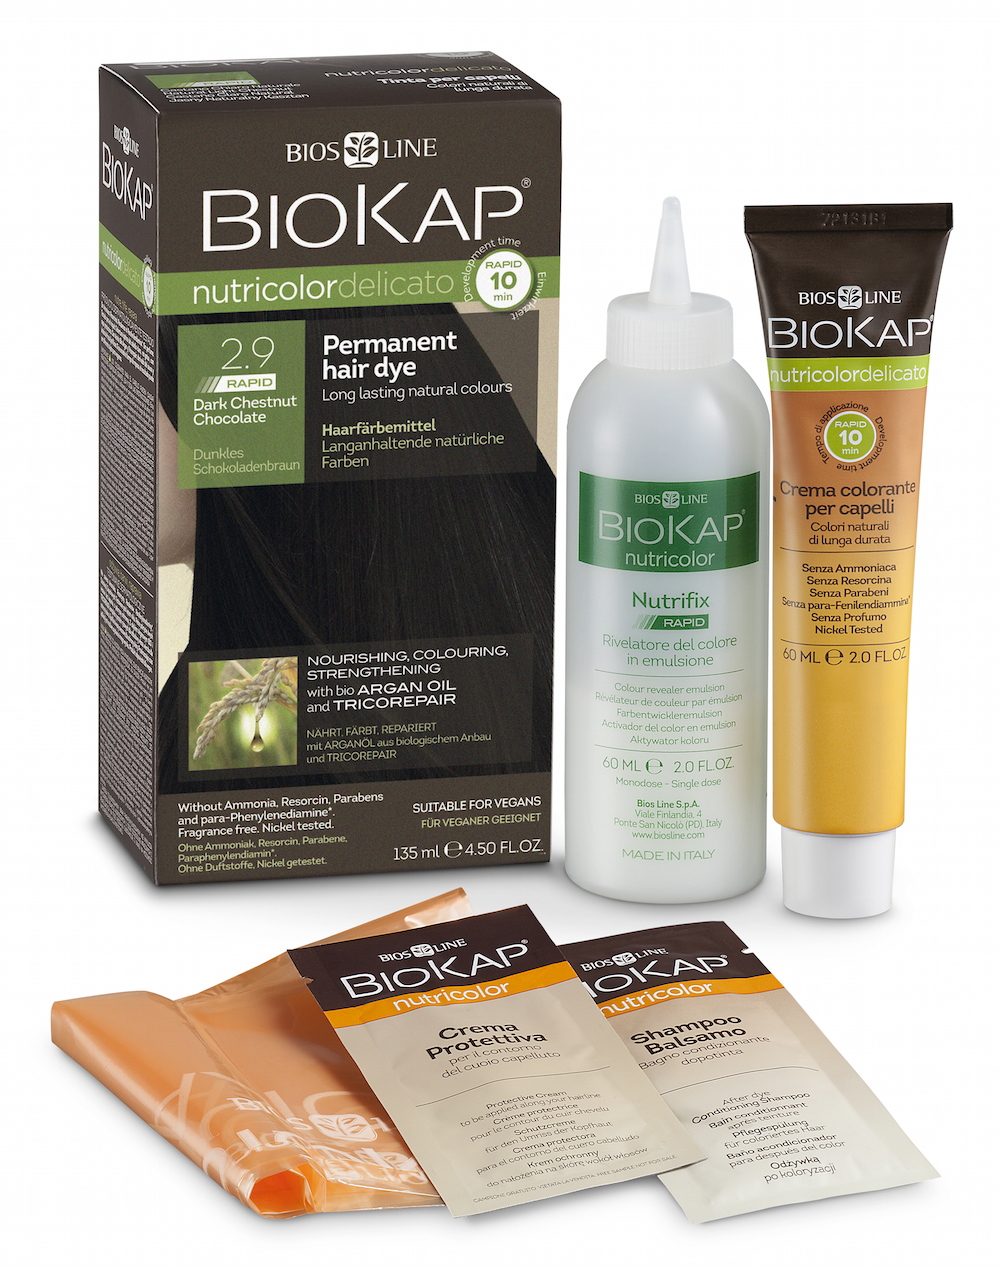 BioKap Nutricolor Delicato Rapid Hair Dye - Dark Chestnut Chocolate 2.9